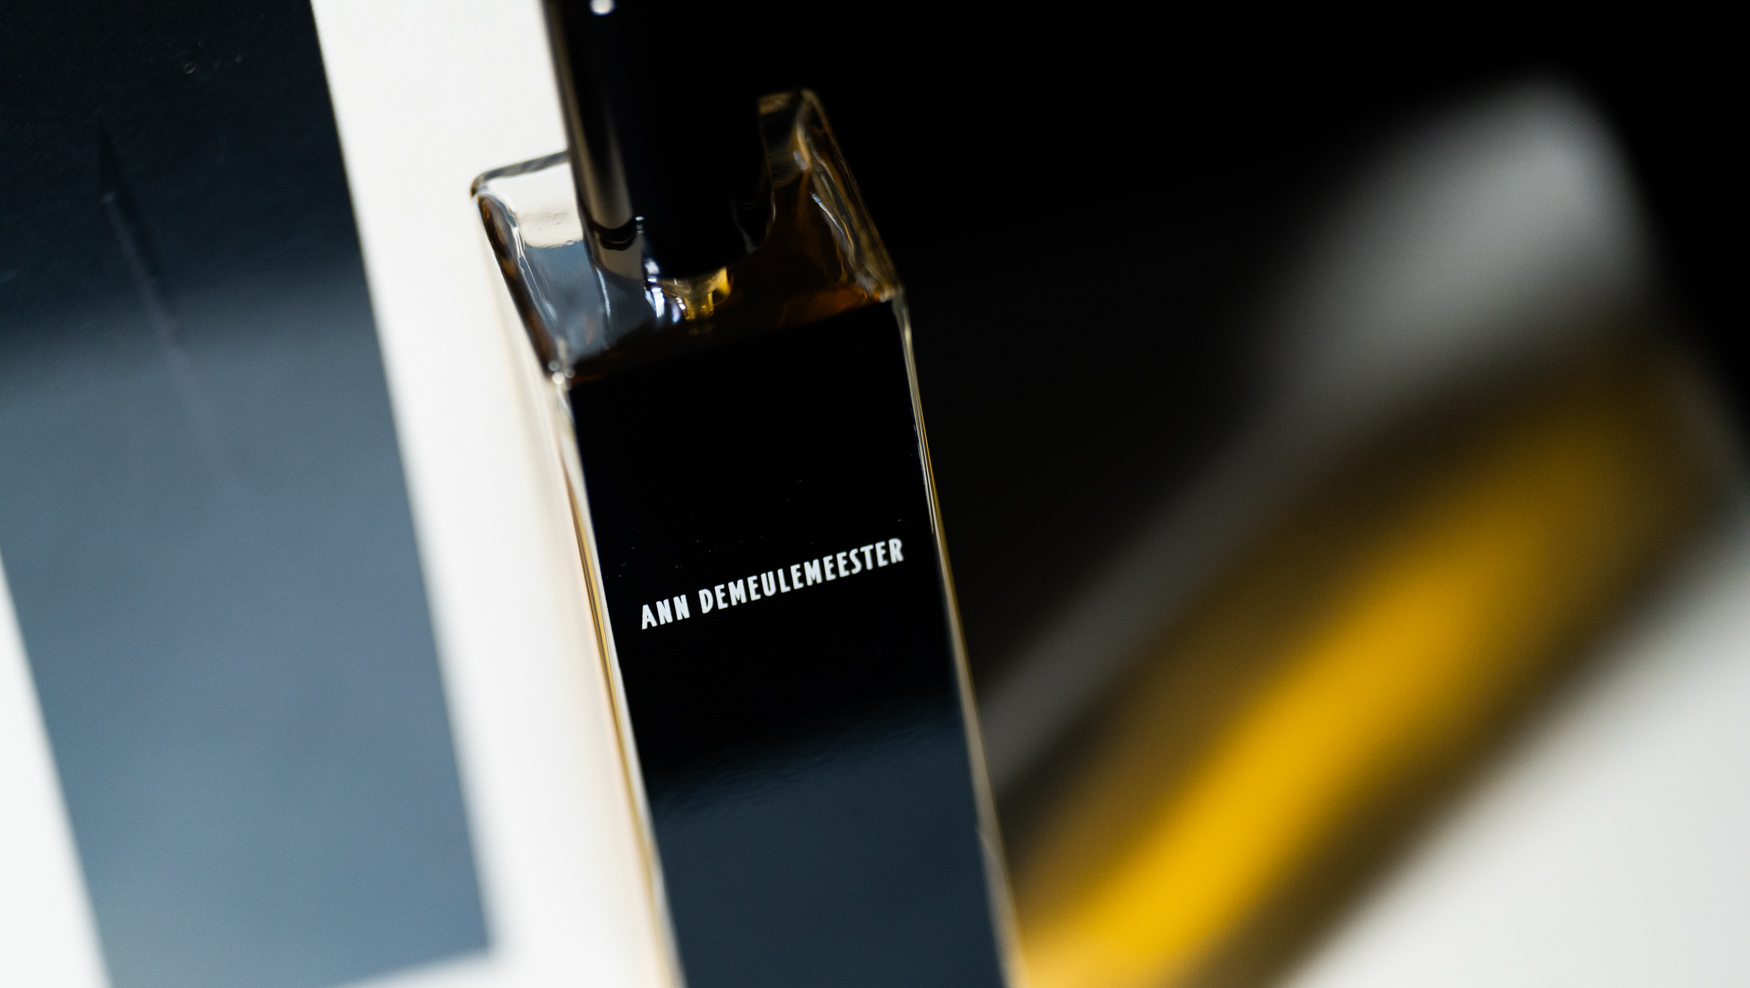 ANN DEMEULEMEESTER “A” perfume